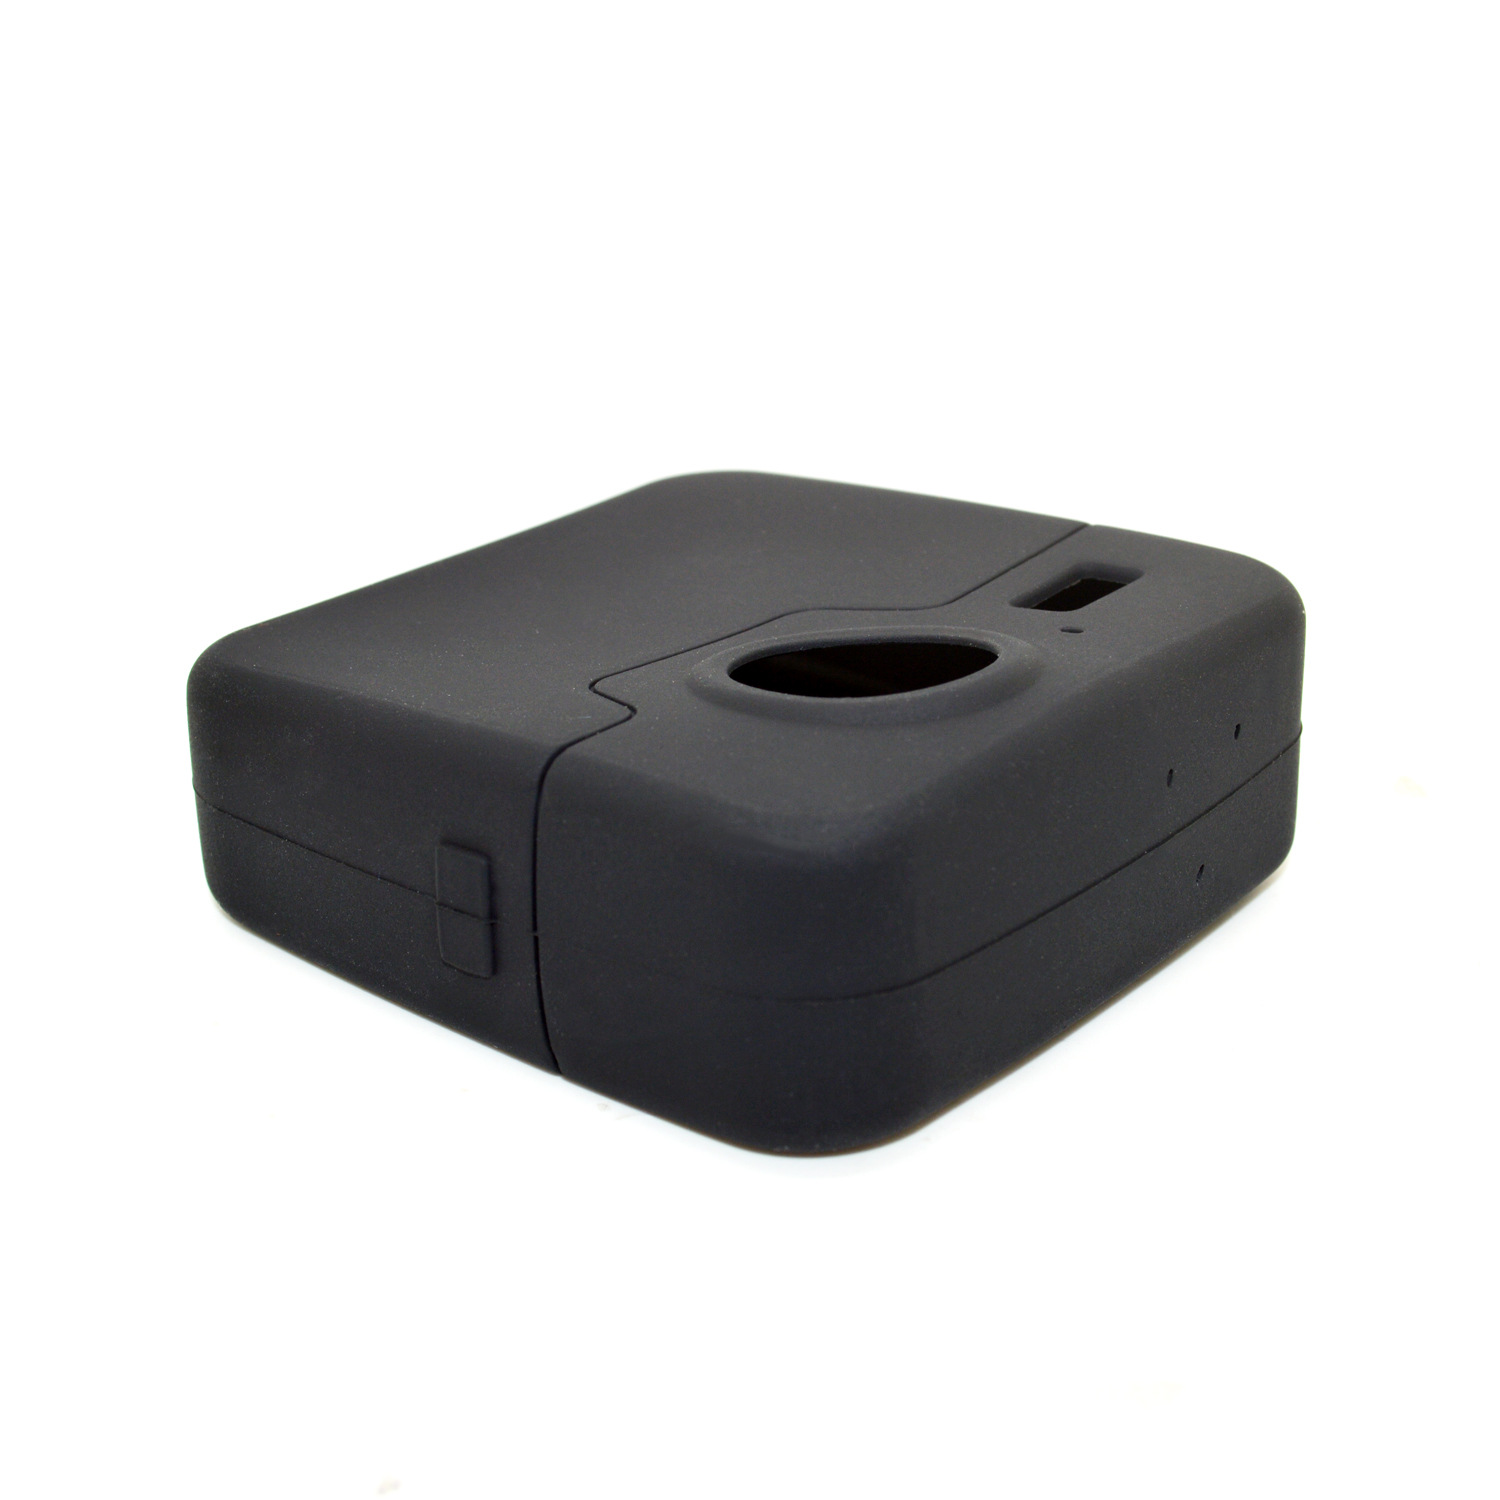 Silicone-Protective-Case-Skin-Cover-Camera-Accessories-for-GoPro-Fusion-360-Camera-8-Colors-1238129-2